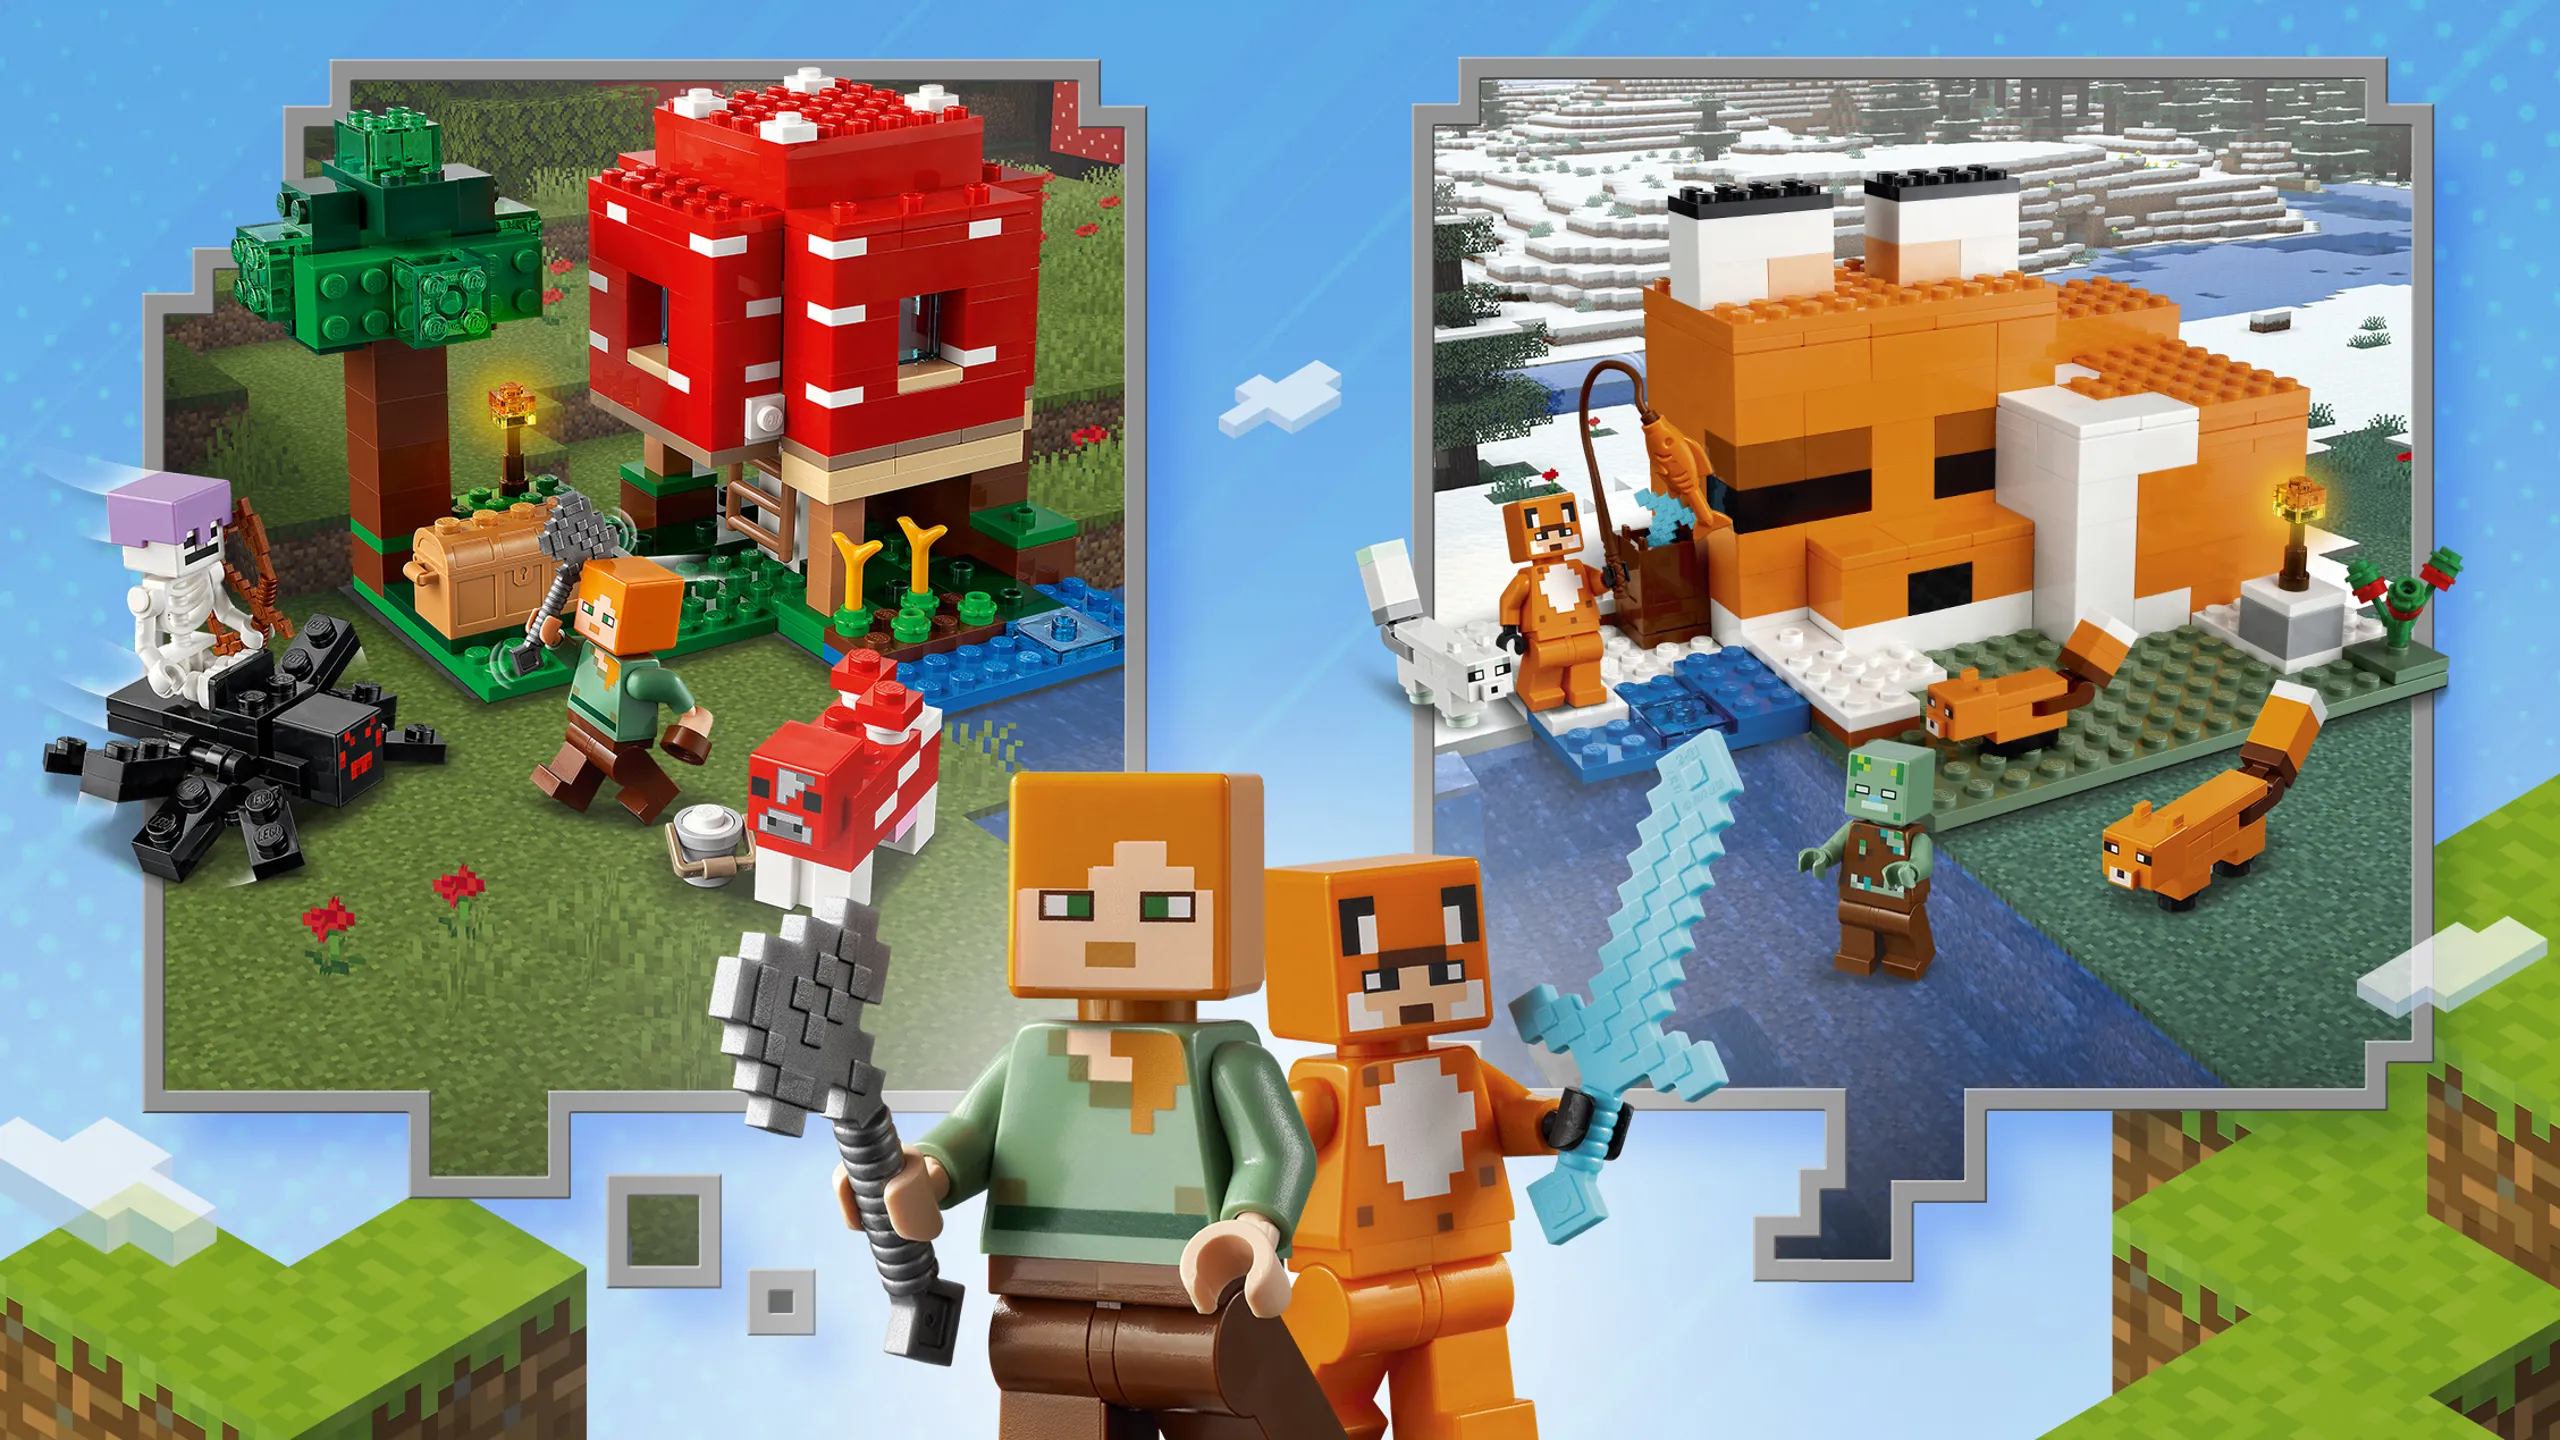 The Lego Minecraft Warden - THE BIG PROBLEM! 